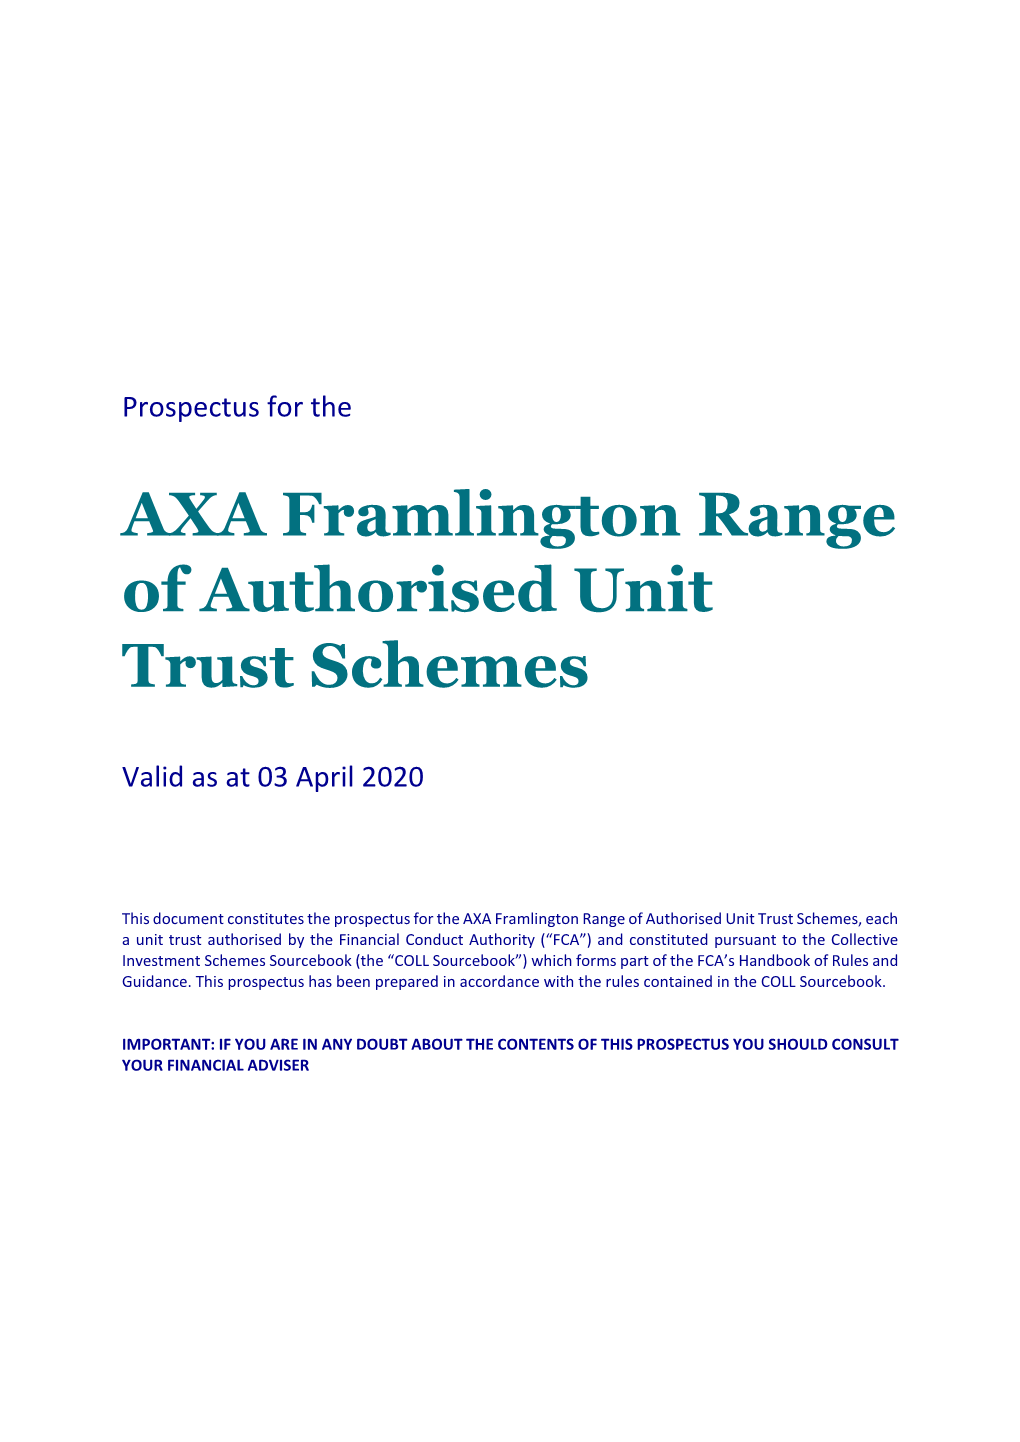 AXA Framlington Range of Authorised Unit Trust Schemes